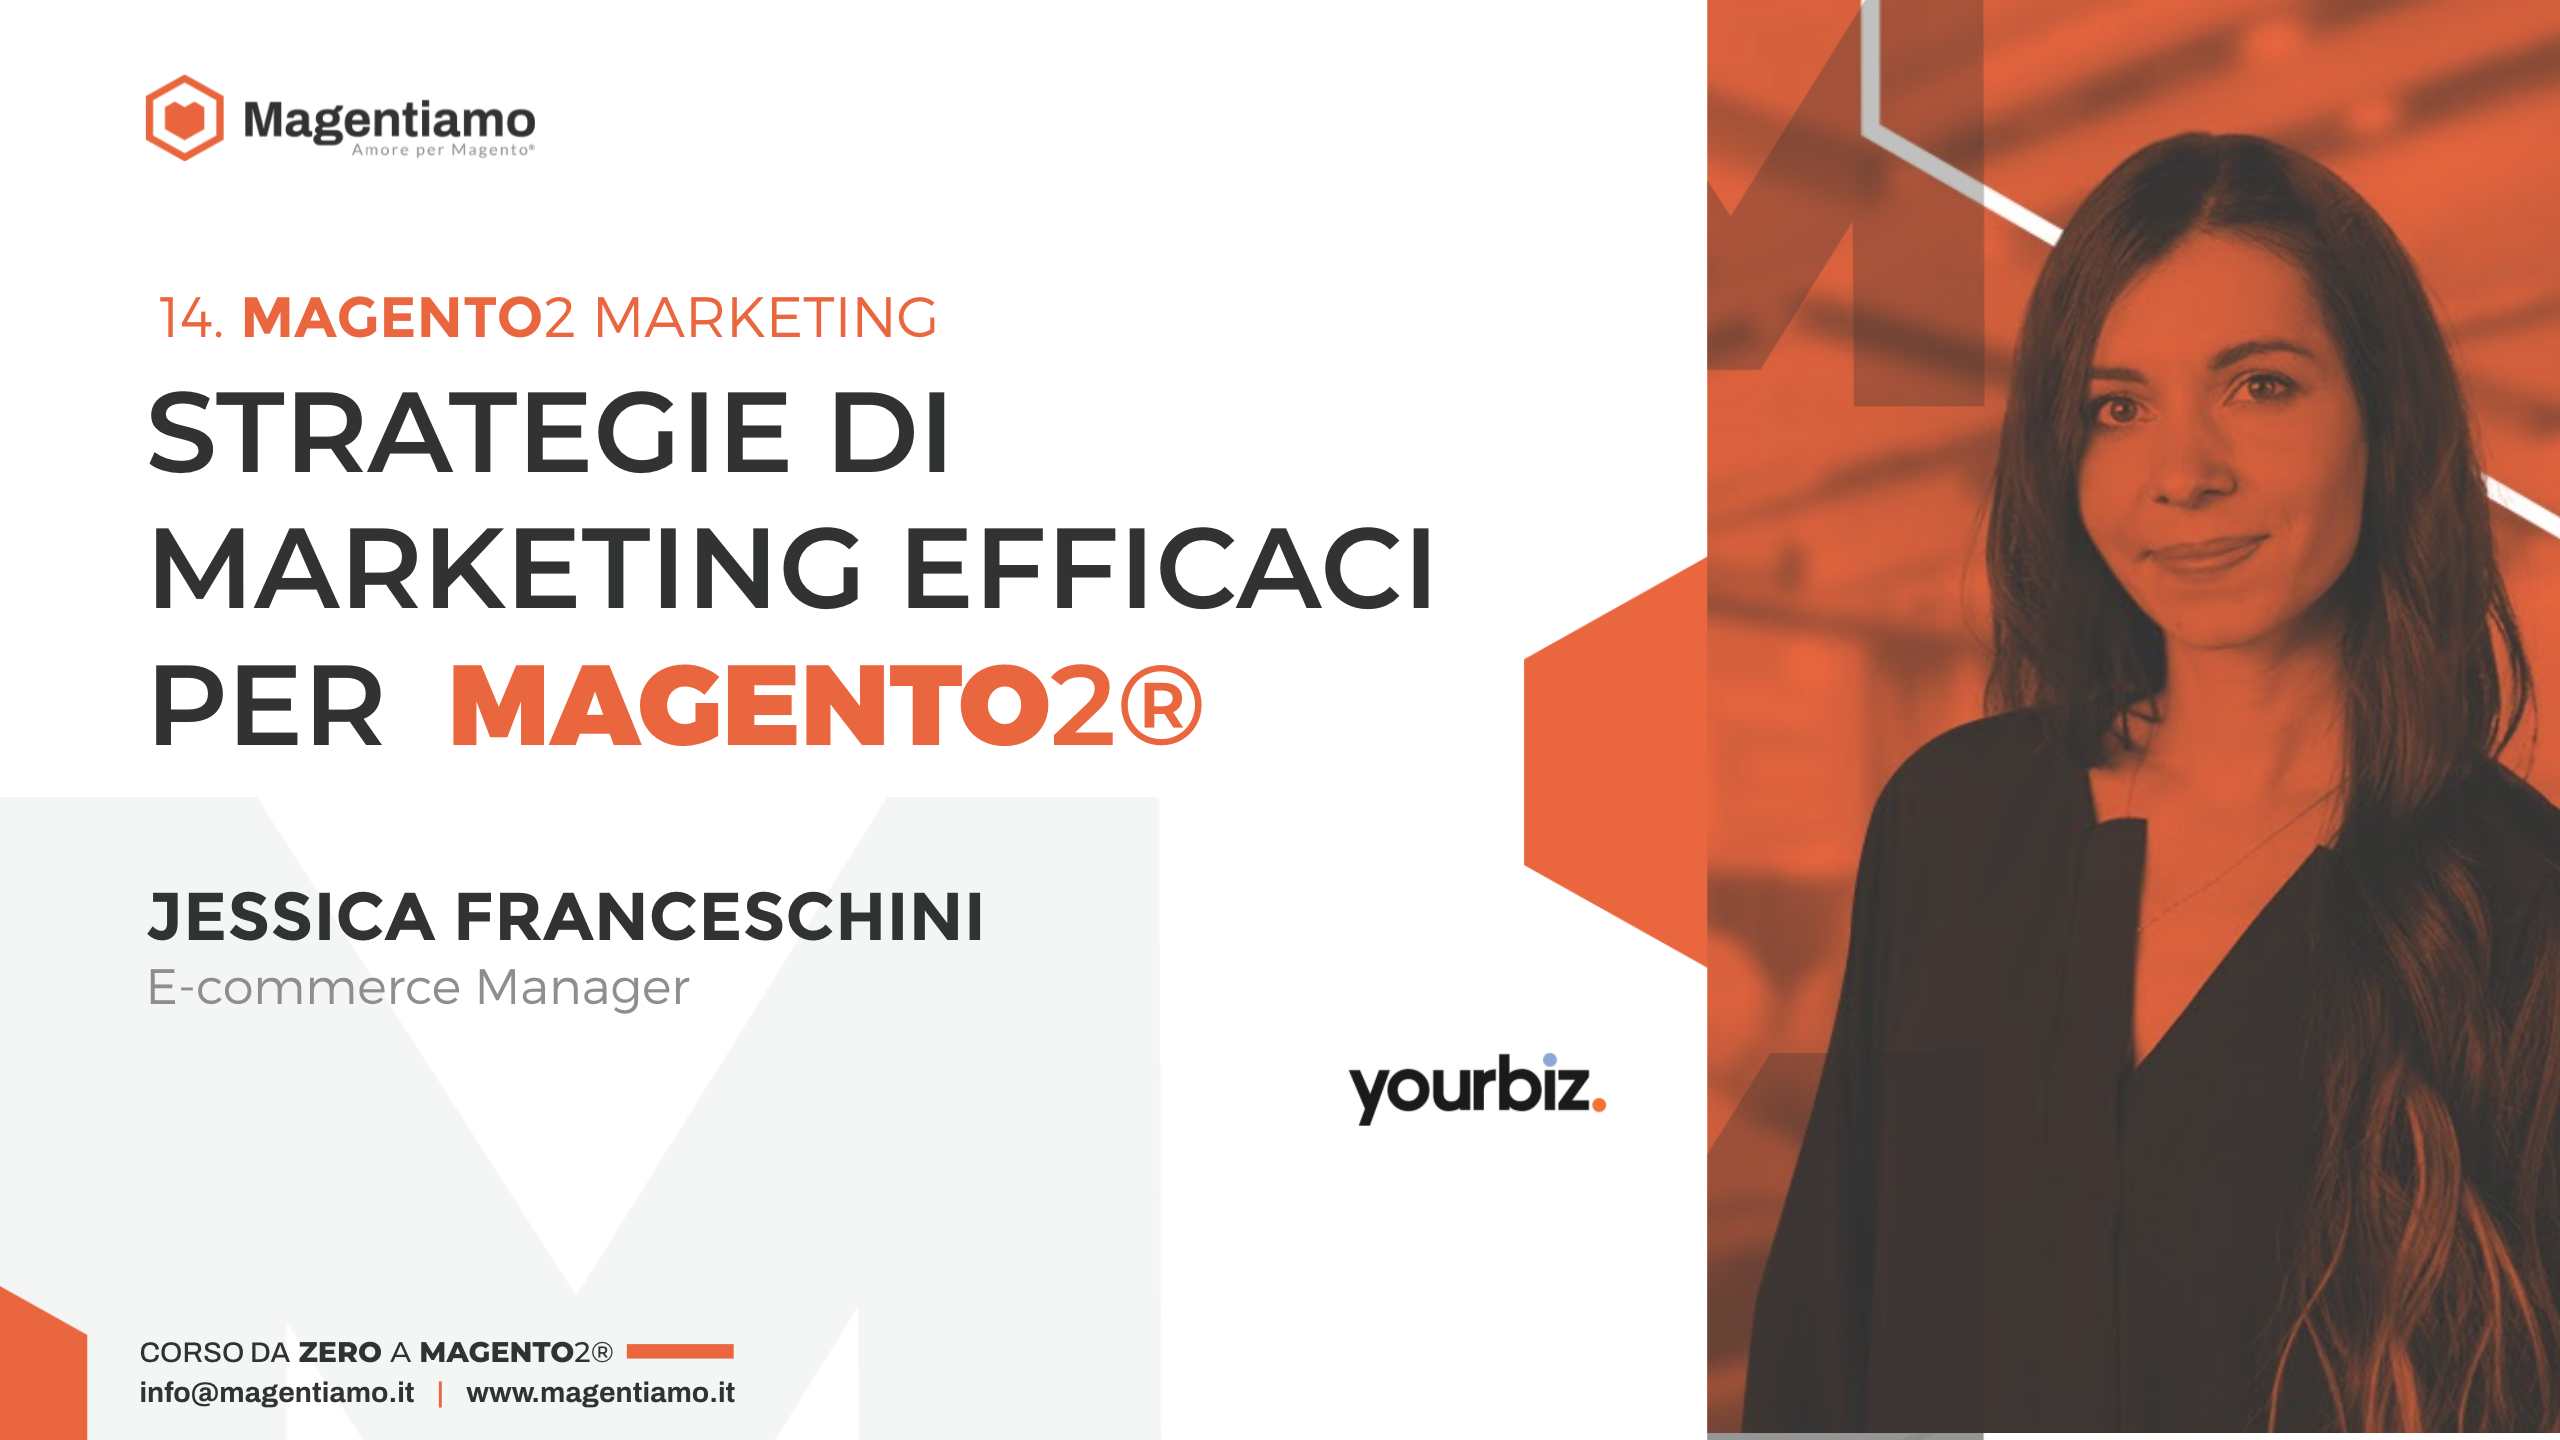 14. MARKETING - Strategie di marketing efficaci per Magento 2 - Jessica Franceschini